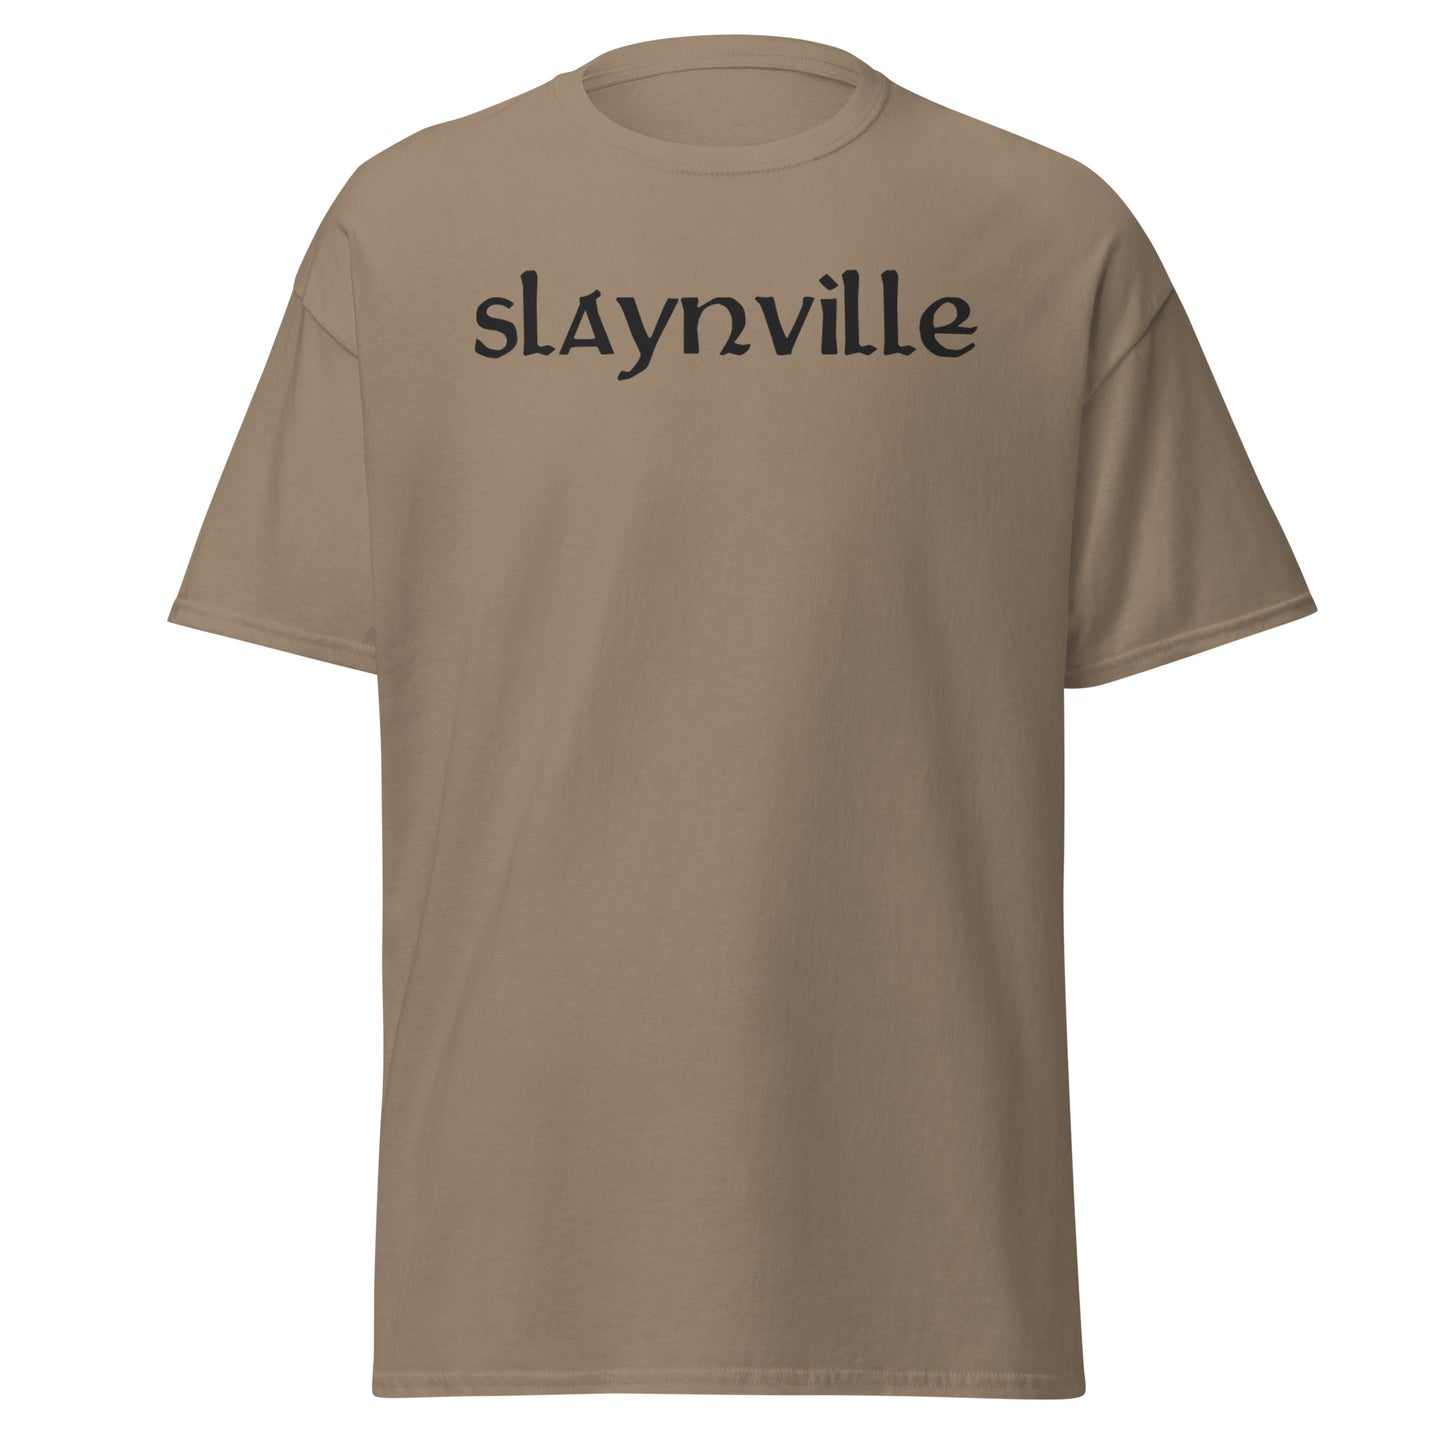 Slaynville Dark Men's T-Shirt